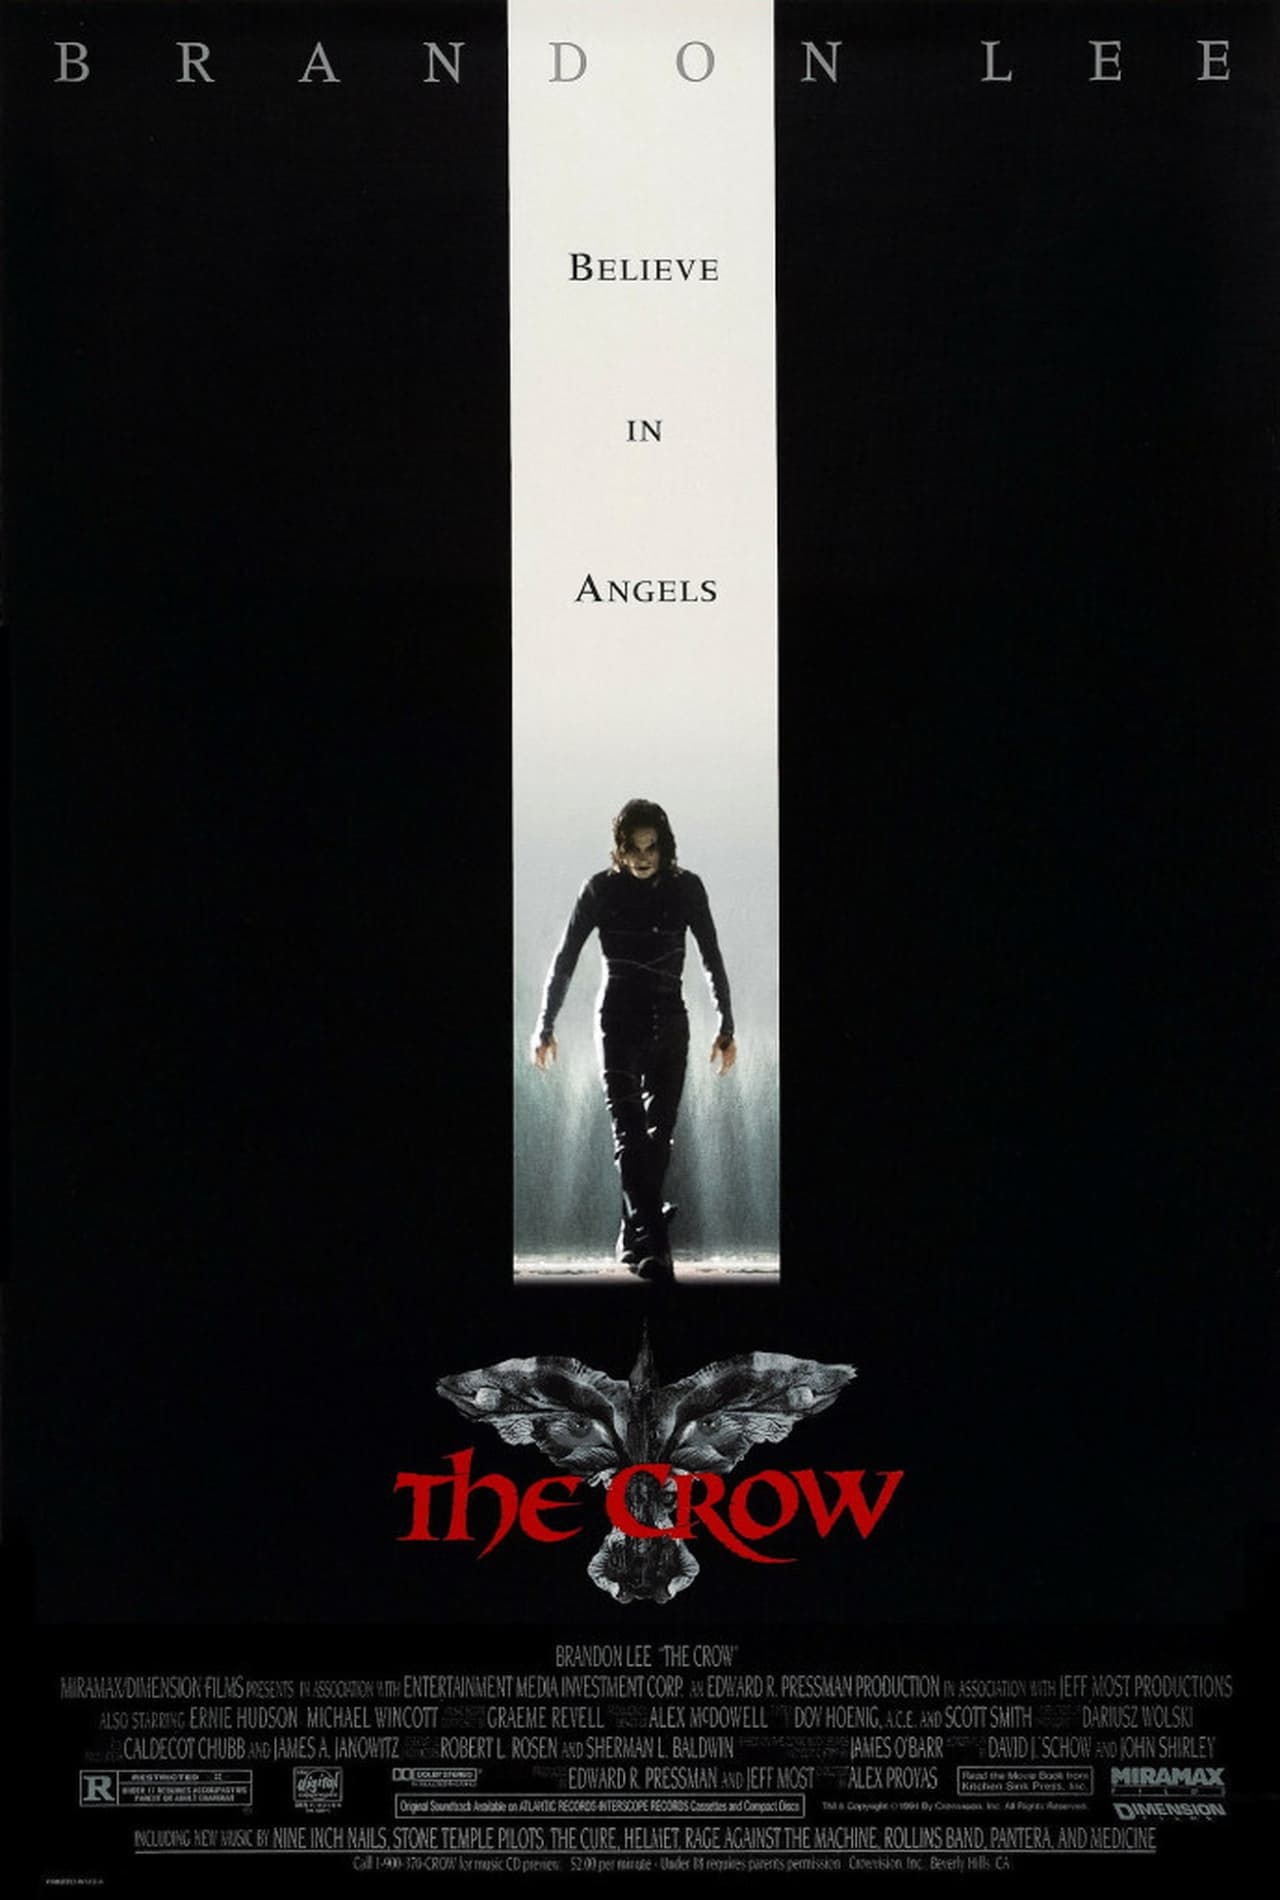 EN - The CROW (1994) BRANDON LEE